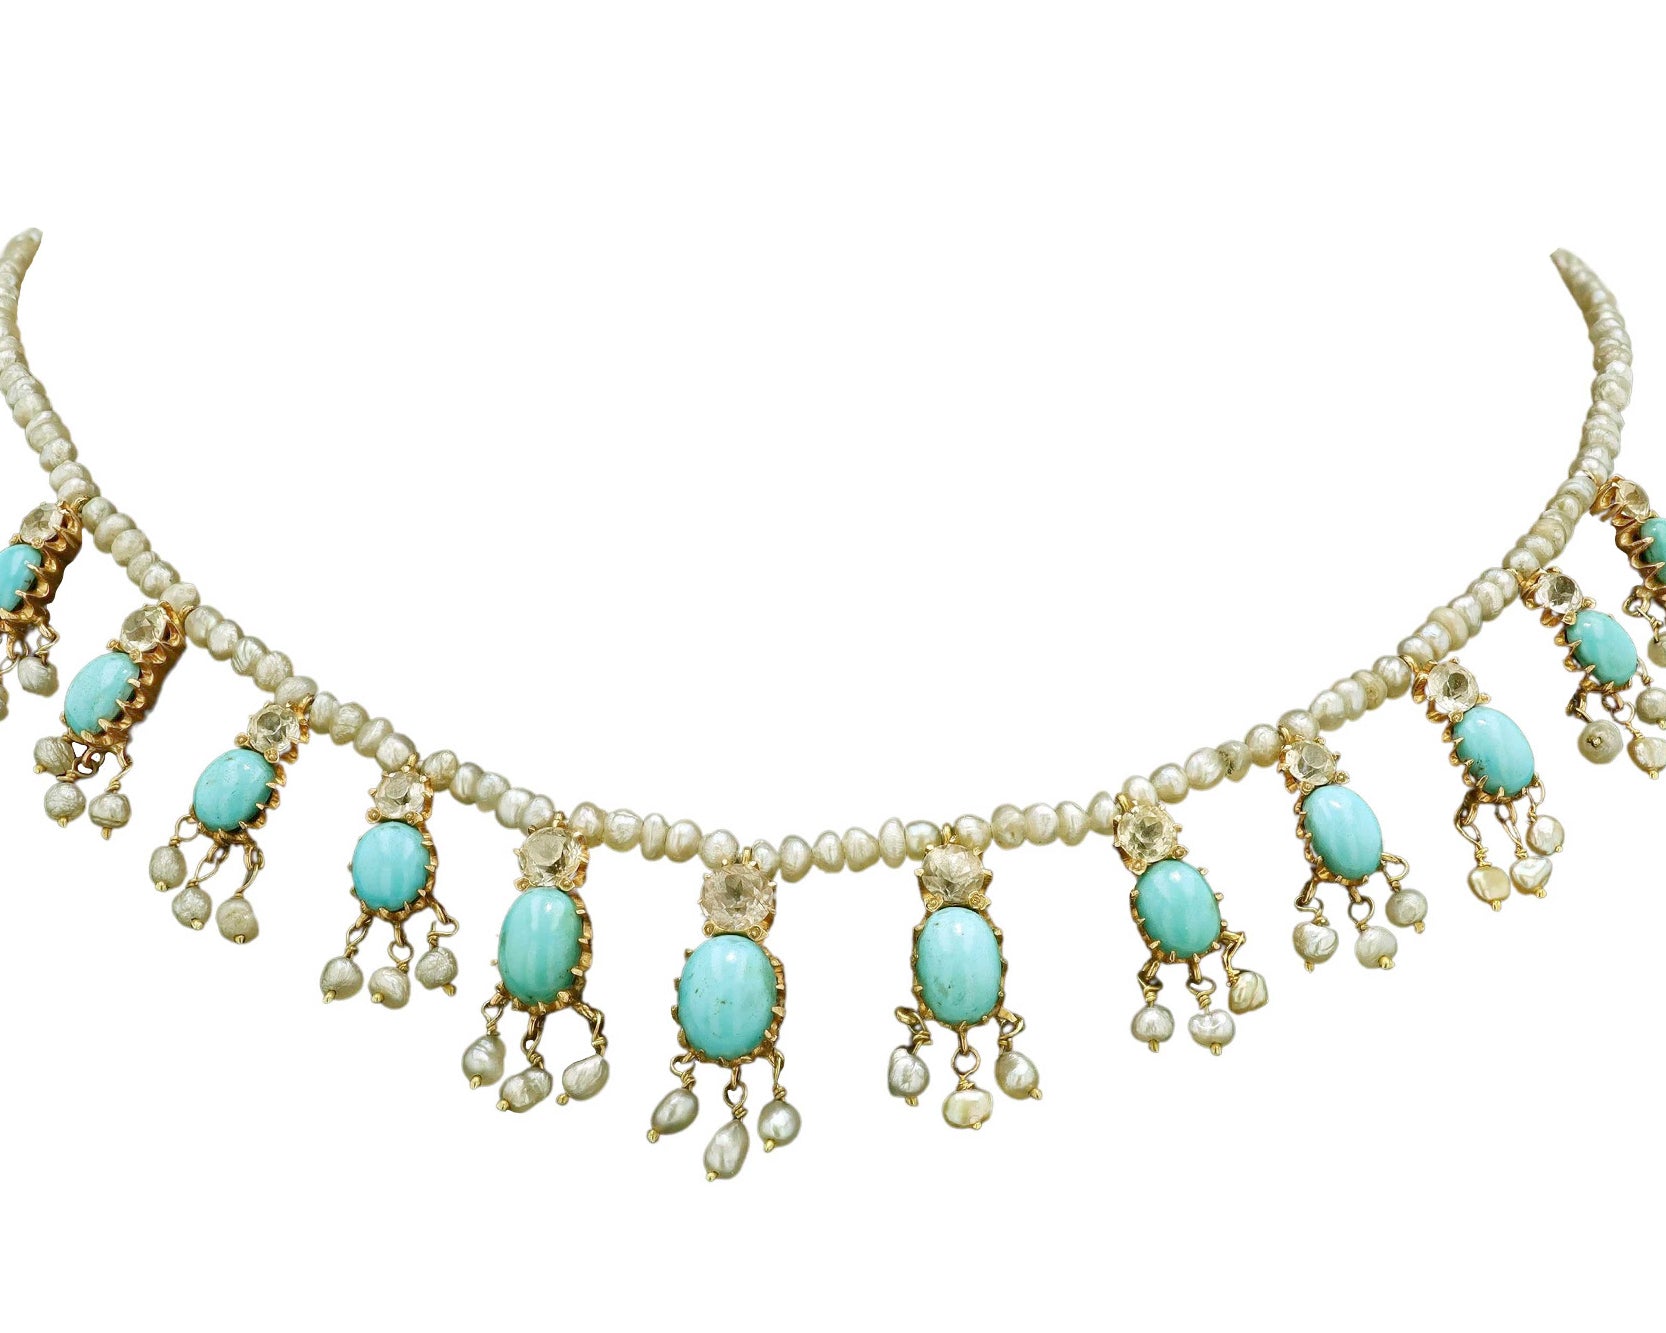 Antique Turquoise Necklace